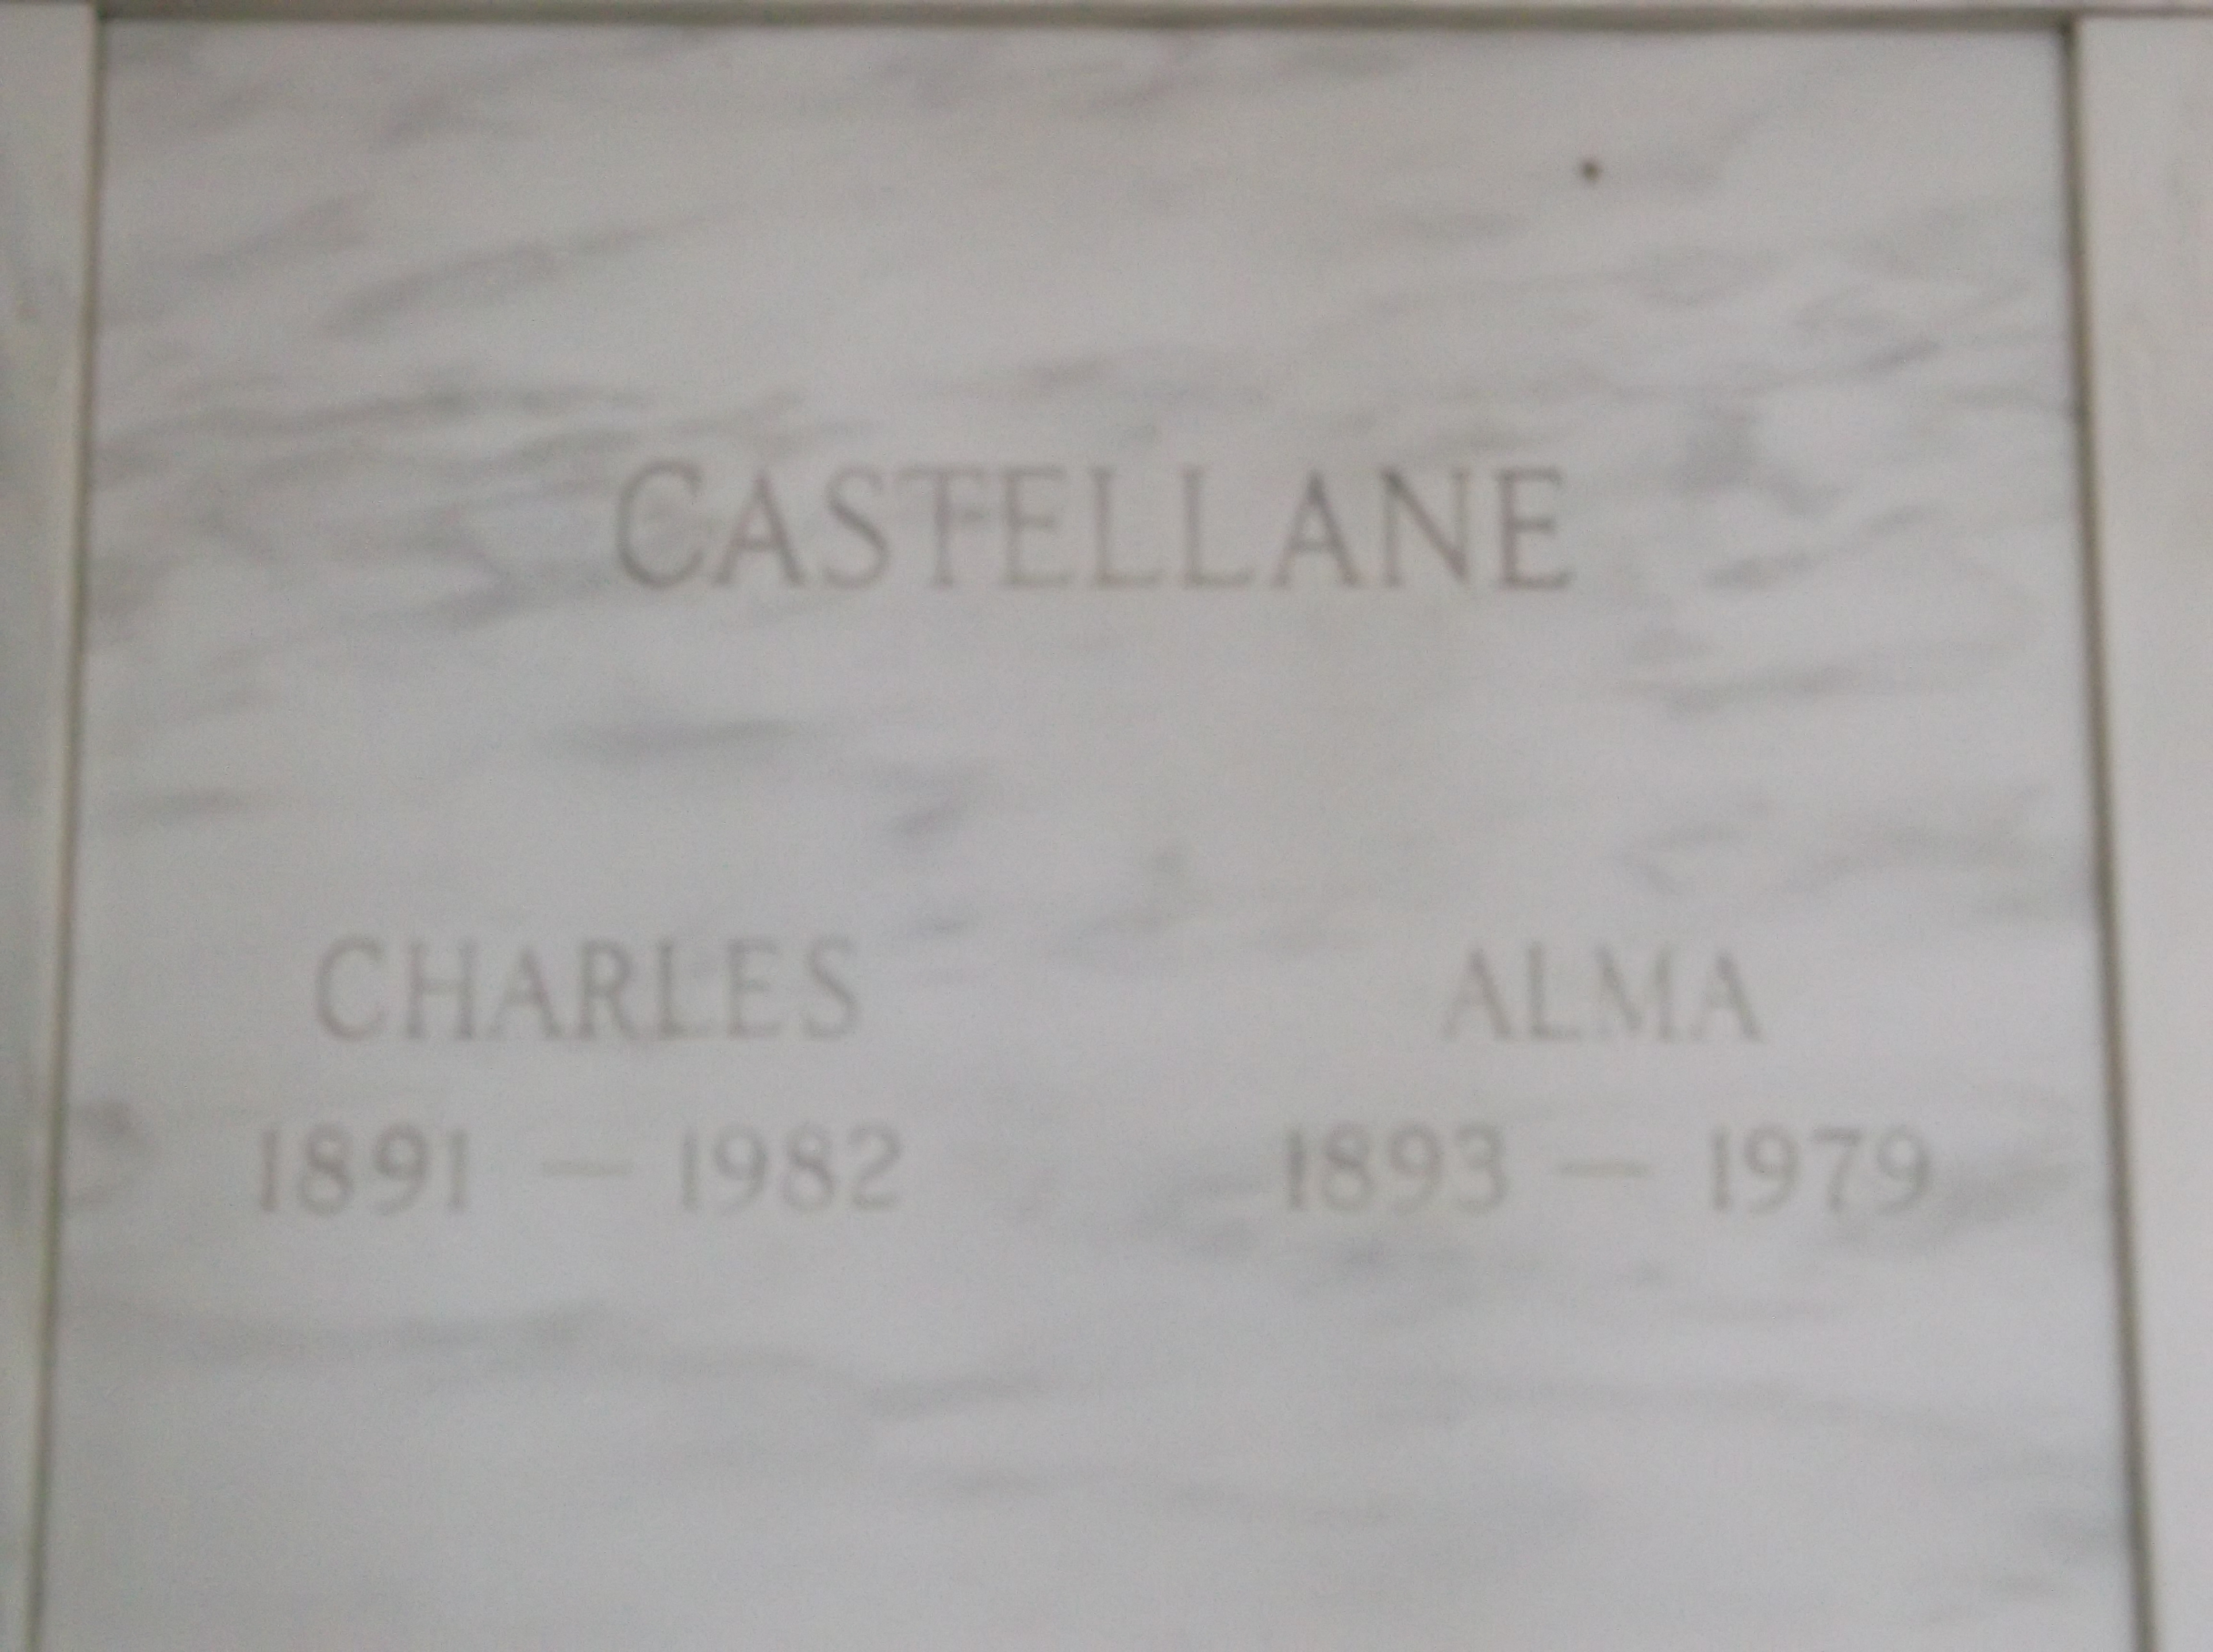 Charles Castellane